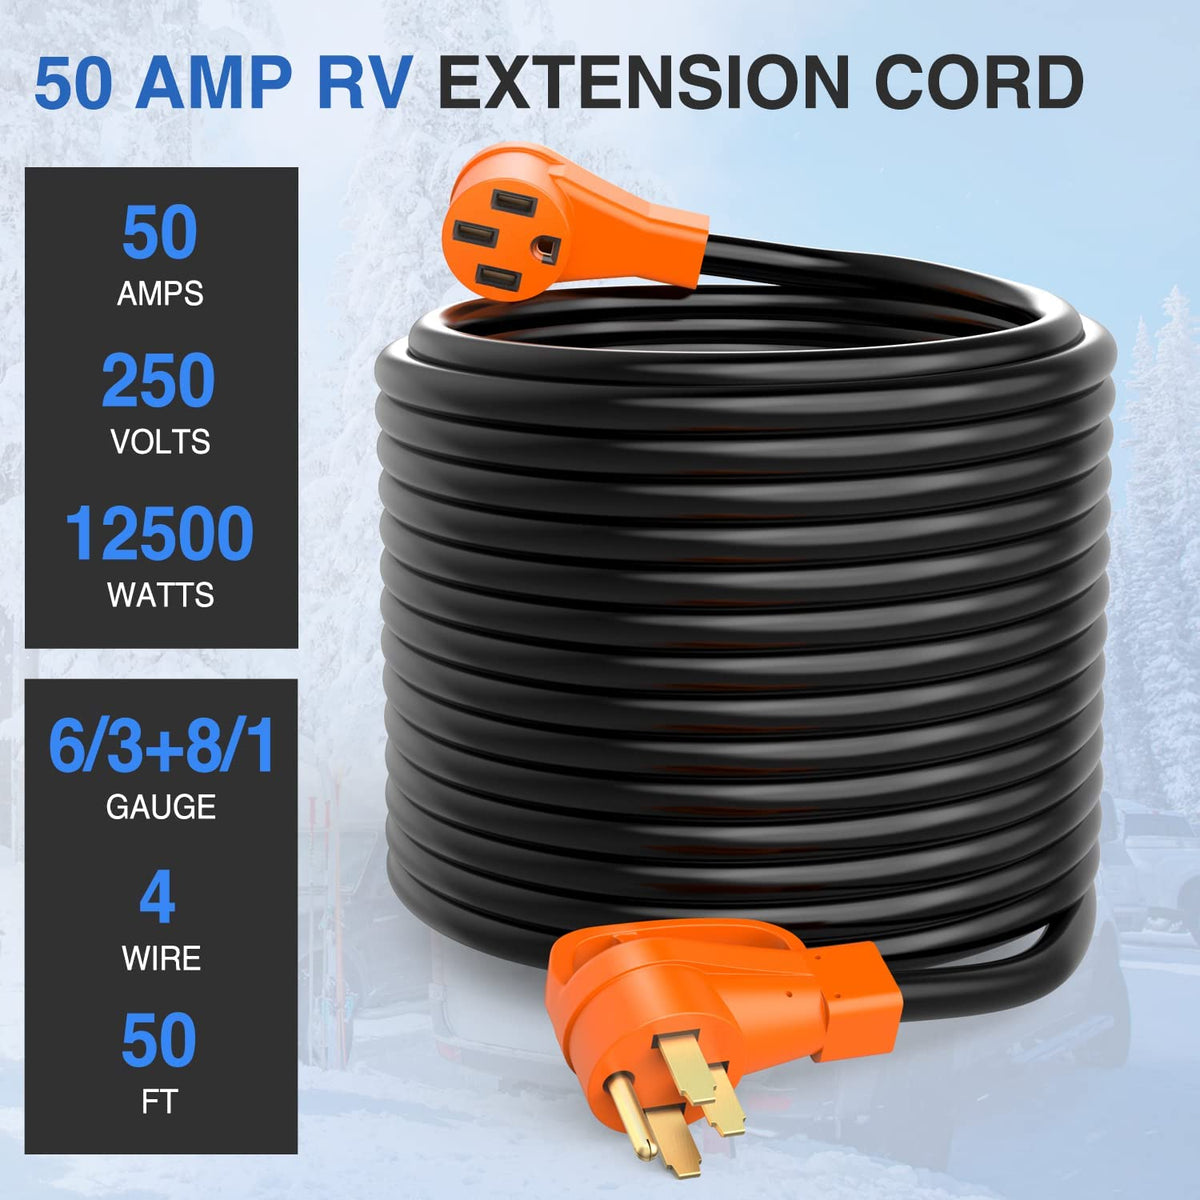 50 AMP RV Extension Cord